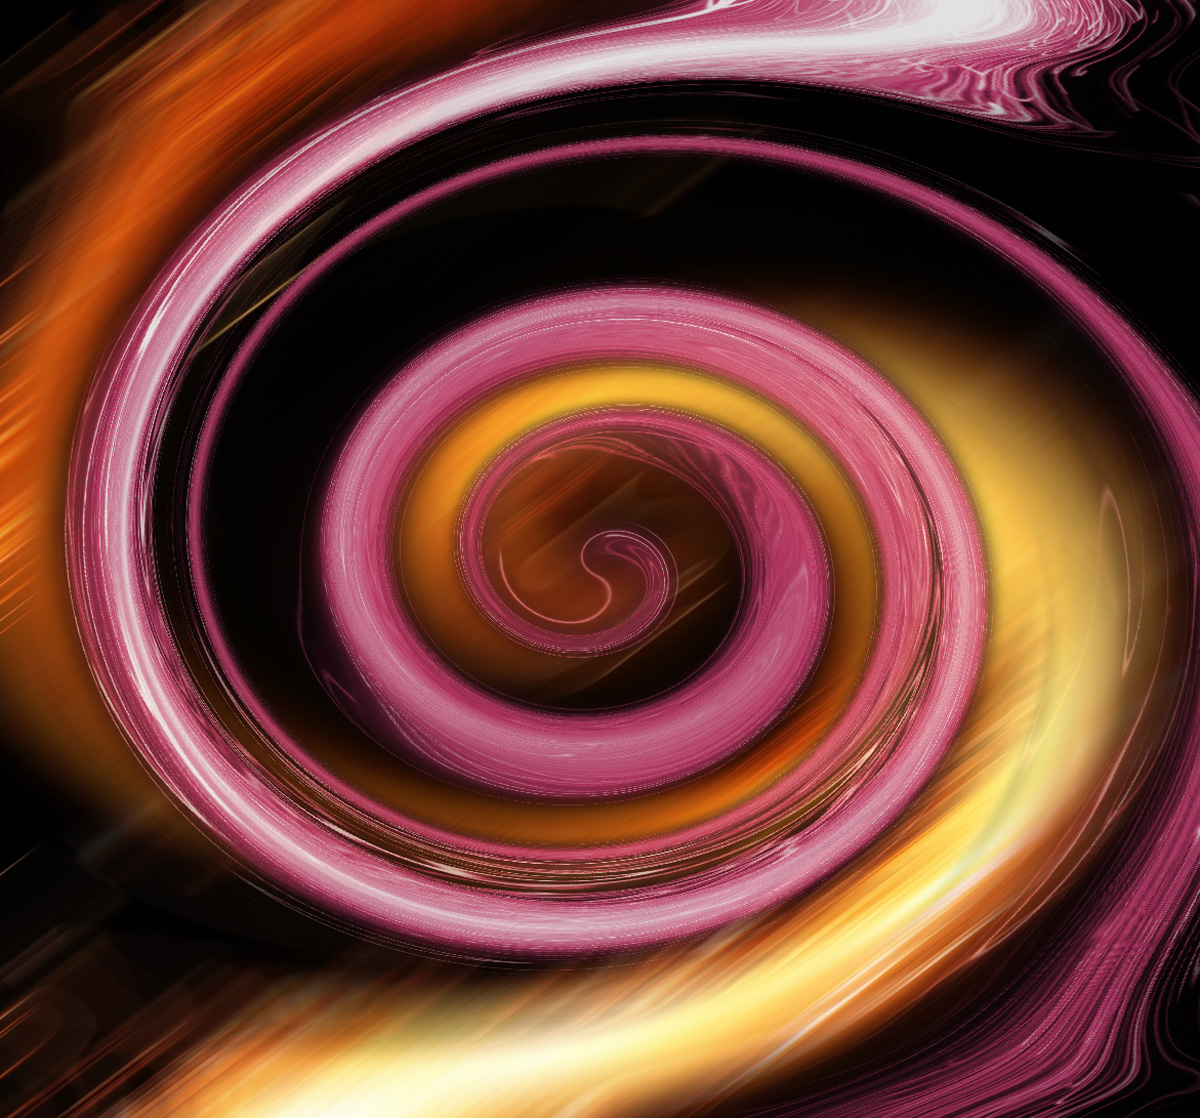 Re spin. Показать на яркую абстракцию, спокойную. Twirl Vectro. Spinning out. Яркий свет фото.